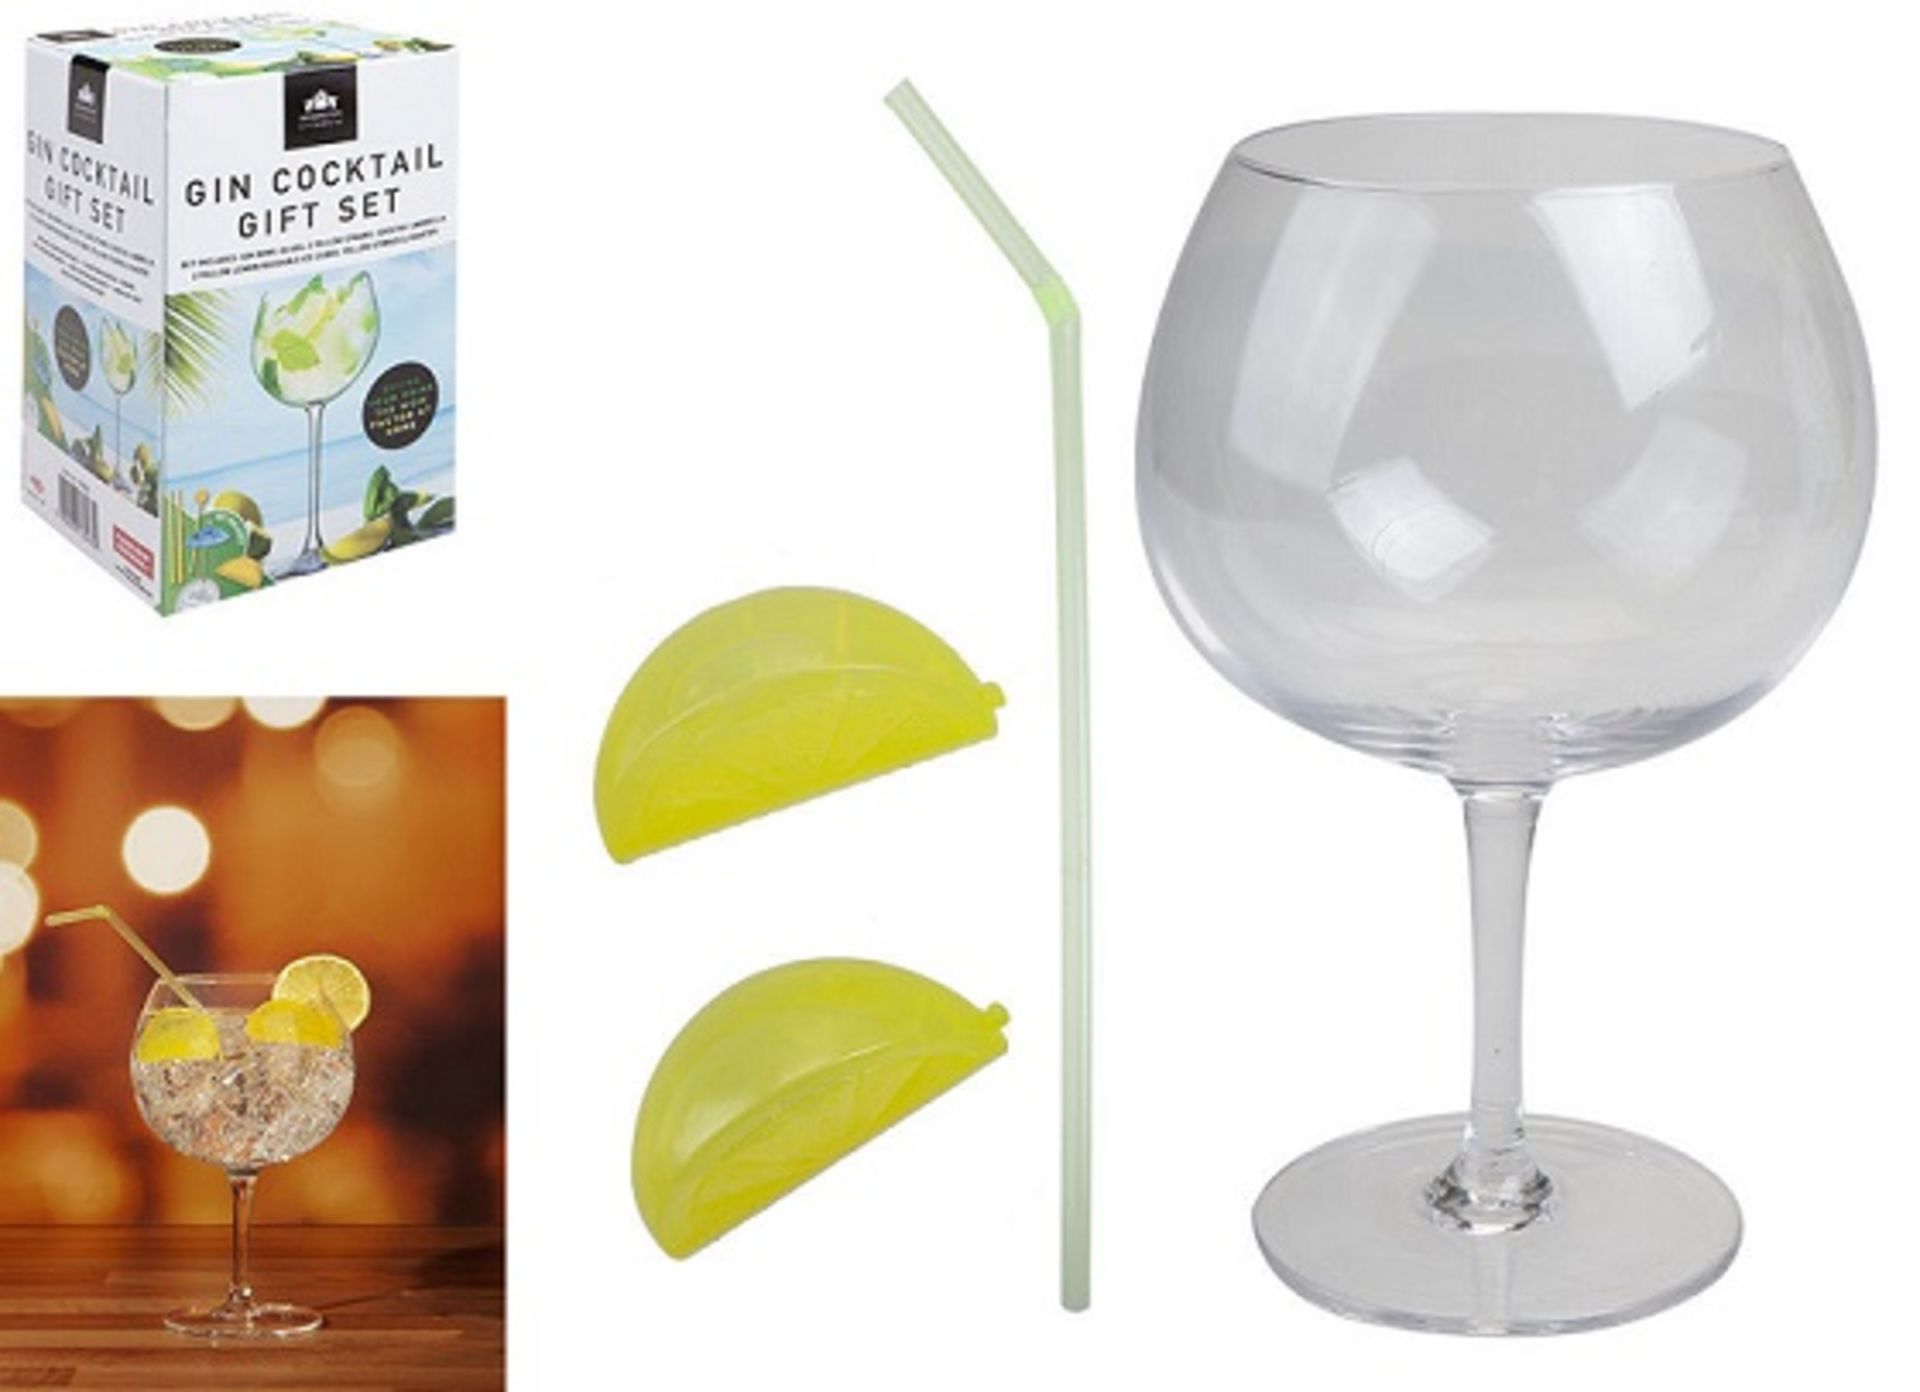 V Brand New Kensington Gin Cocktail Gift Set Includes Gin Bowl Glass-Straw-Two Lemon Reusable Ice